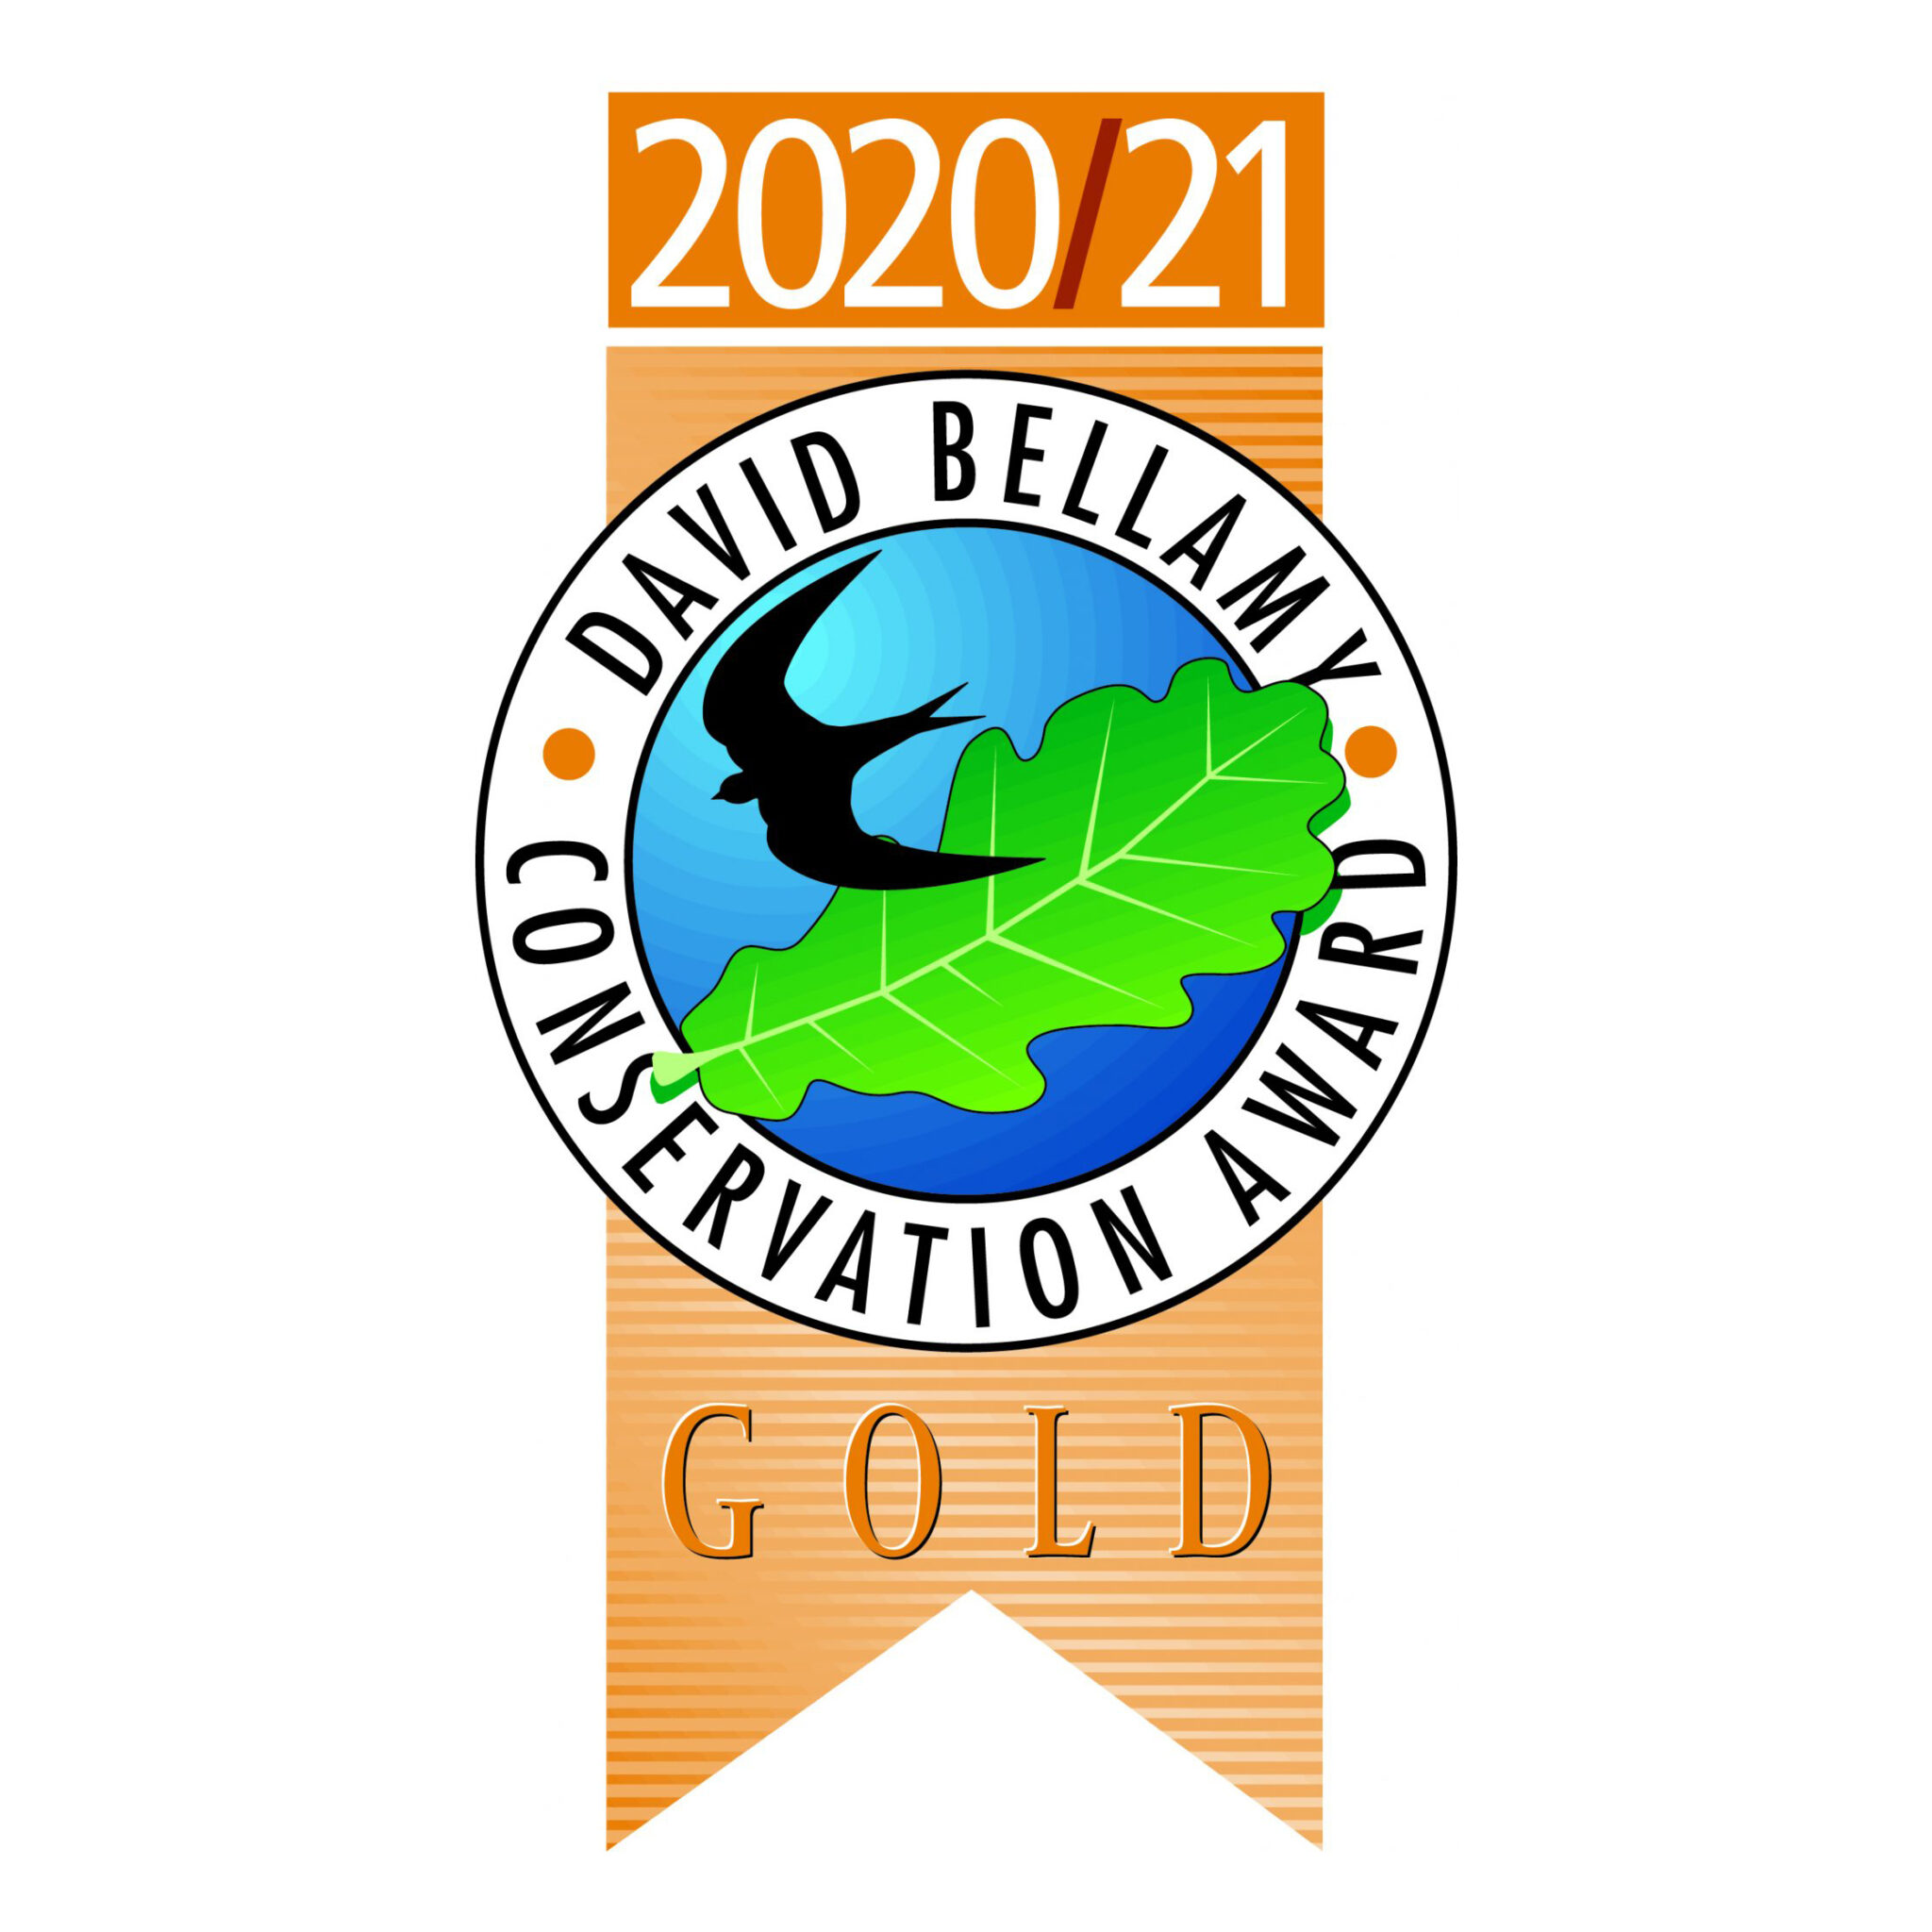 David Bellamy Conservation Gold Award